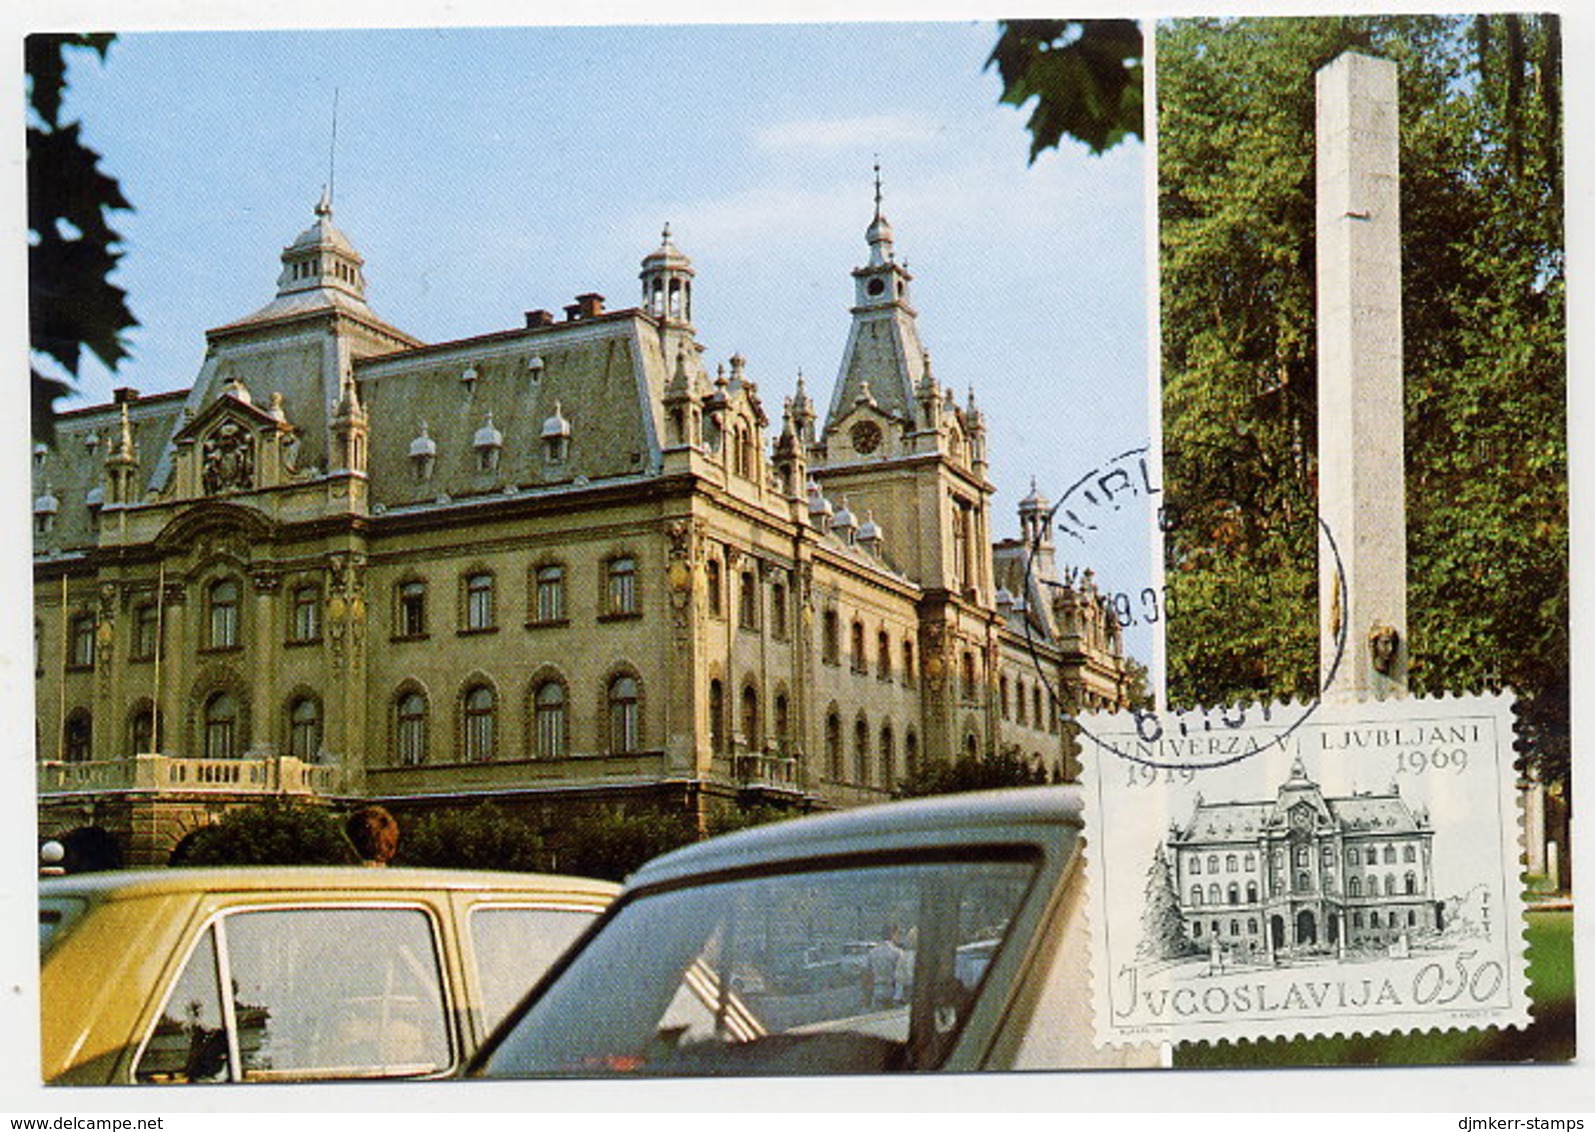 YUGOSLAVIA 1969 Ljubljana University On Maximum Card. Michel 1358 - Maximum Cards